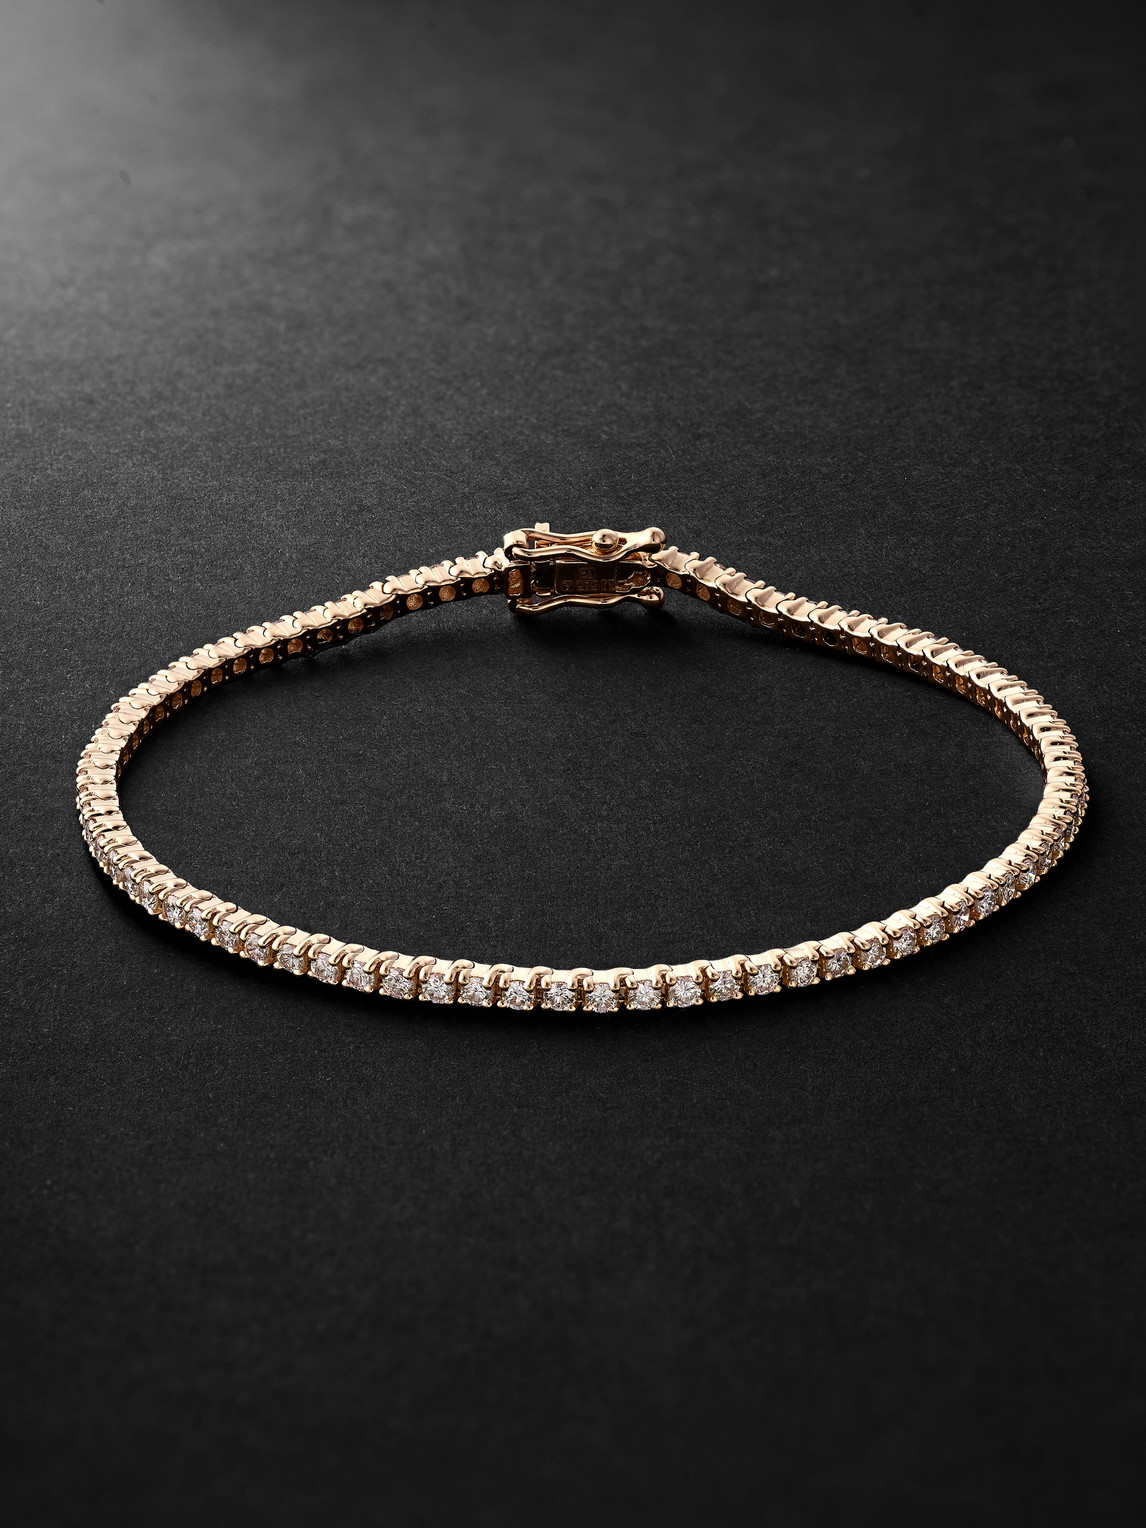 Spectra Pink Gold Diamond Tennis Bracelet